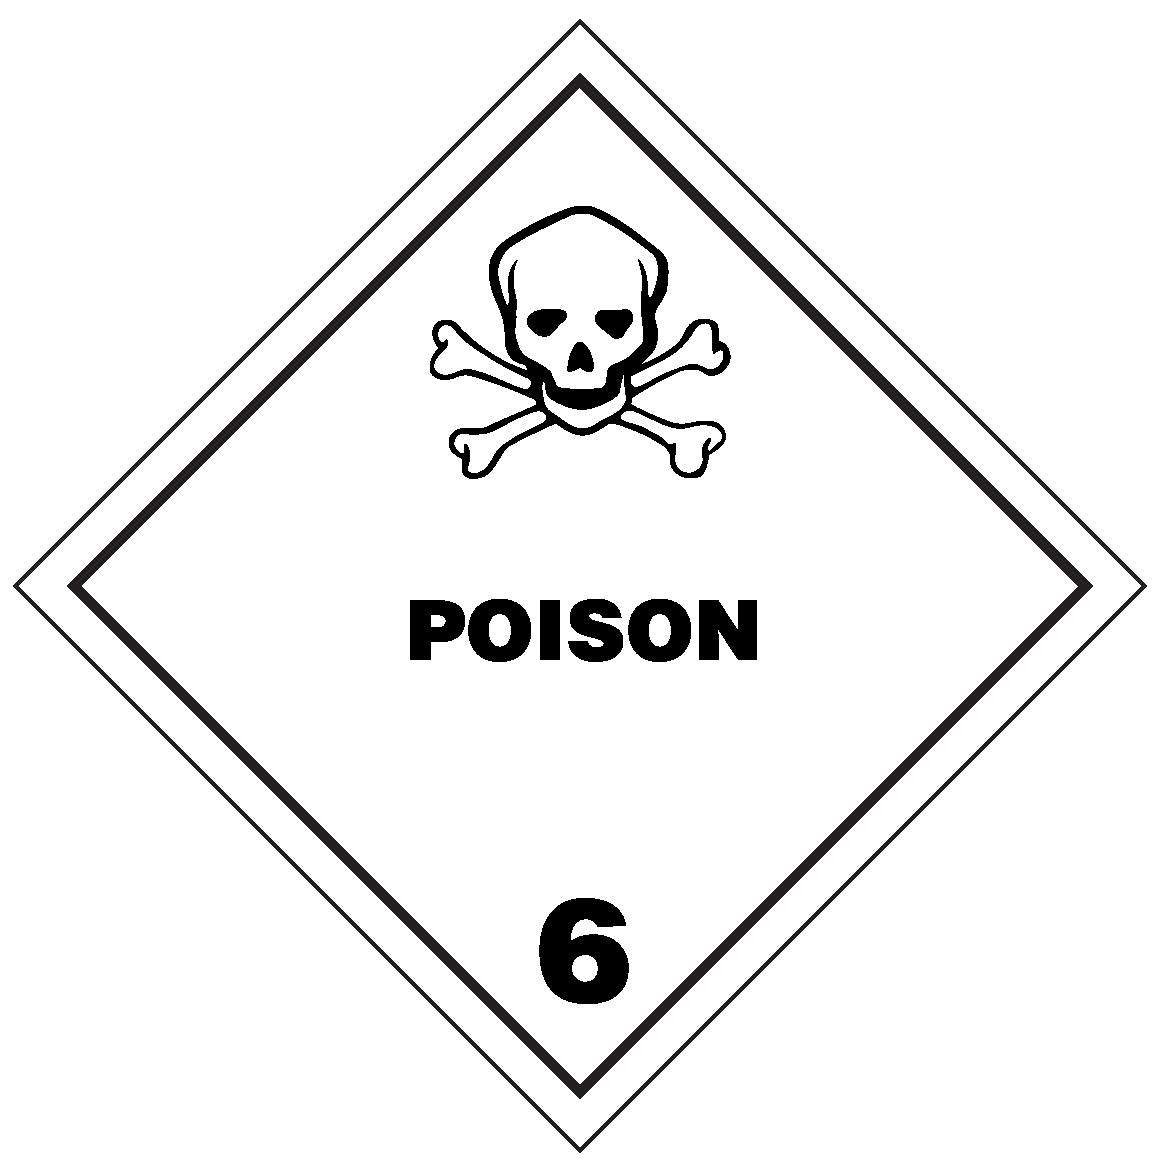 Poison Class 6